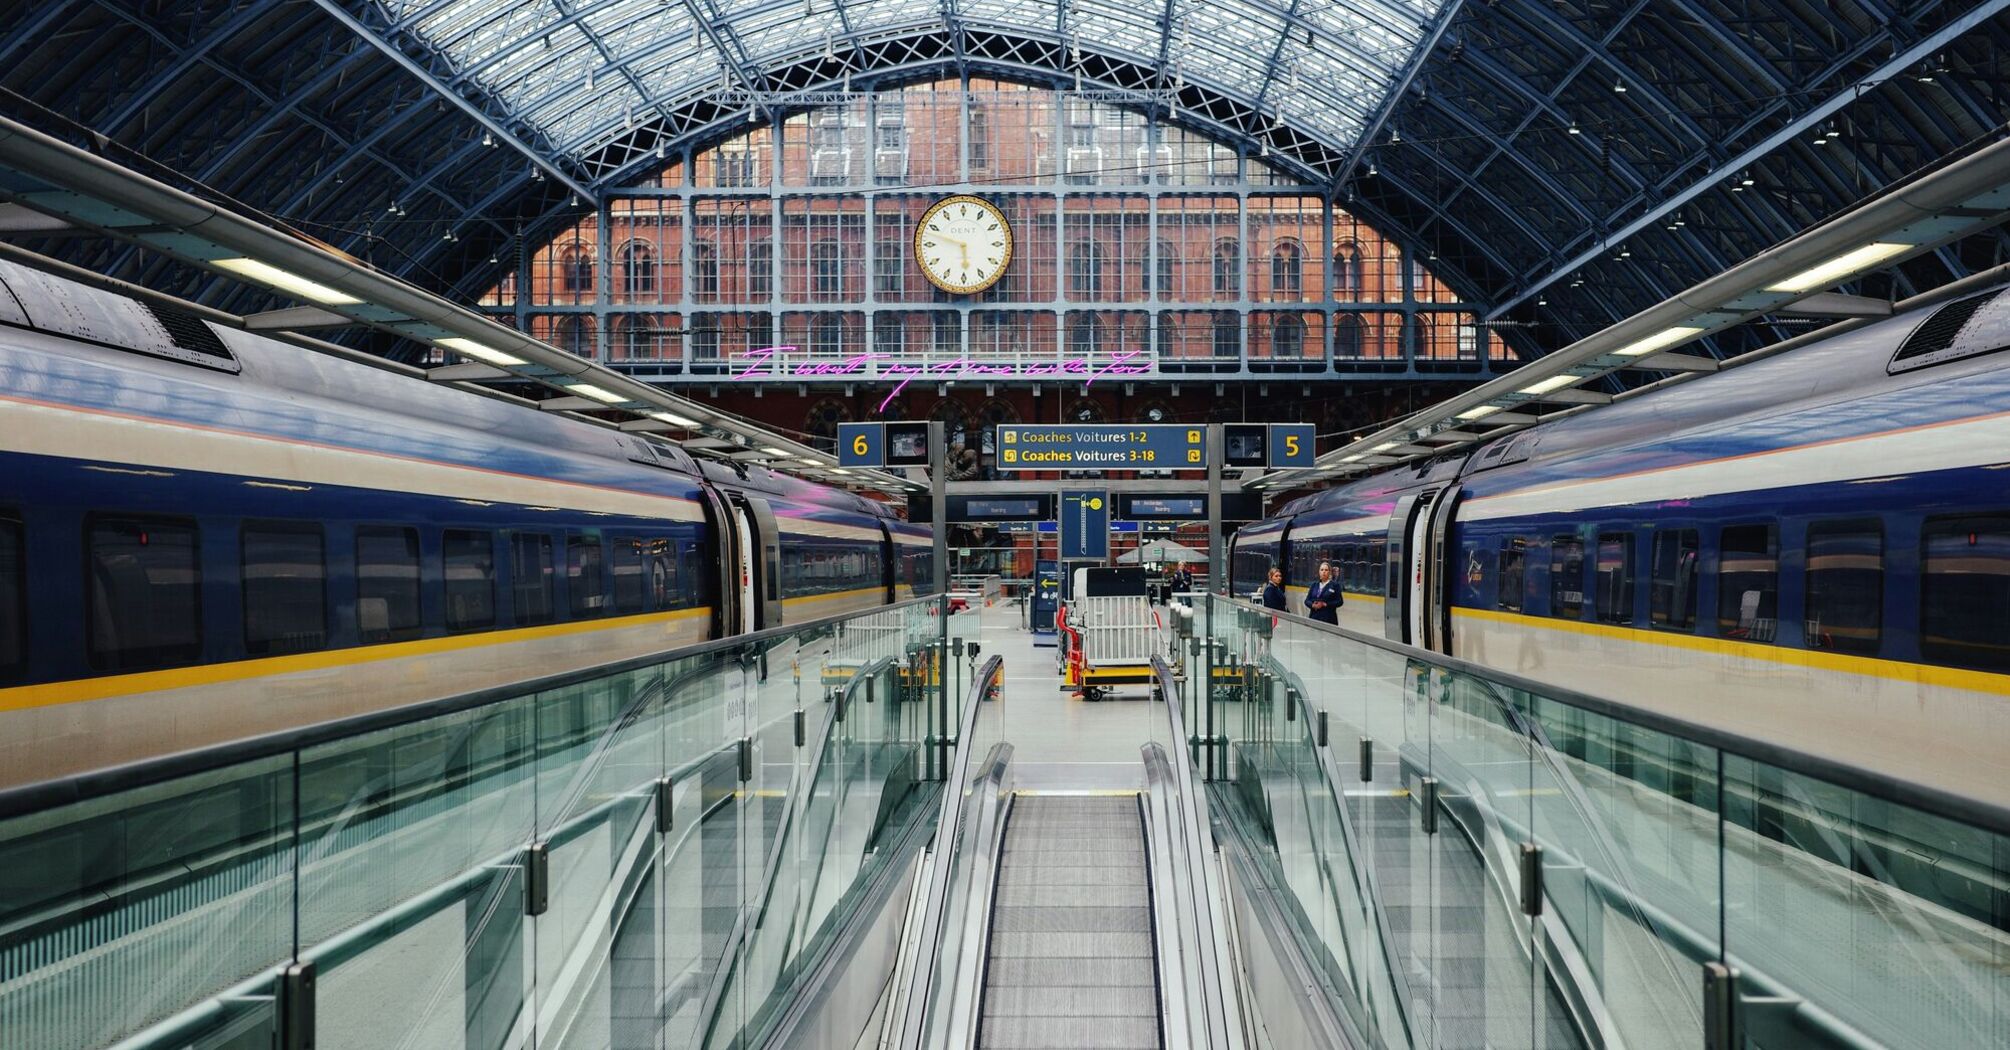 Trains at St Pancras International Station, London